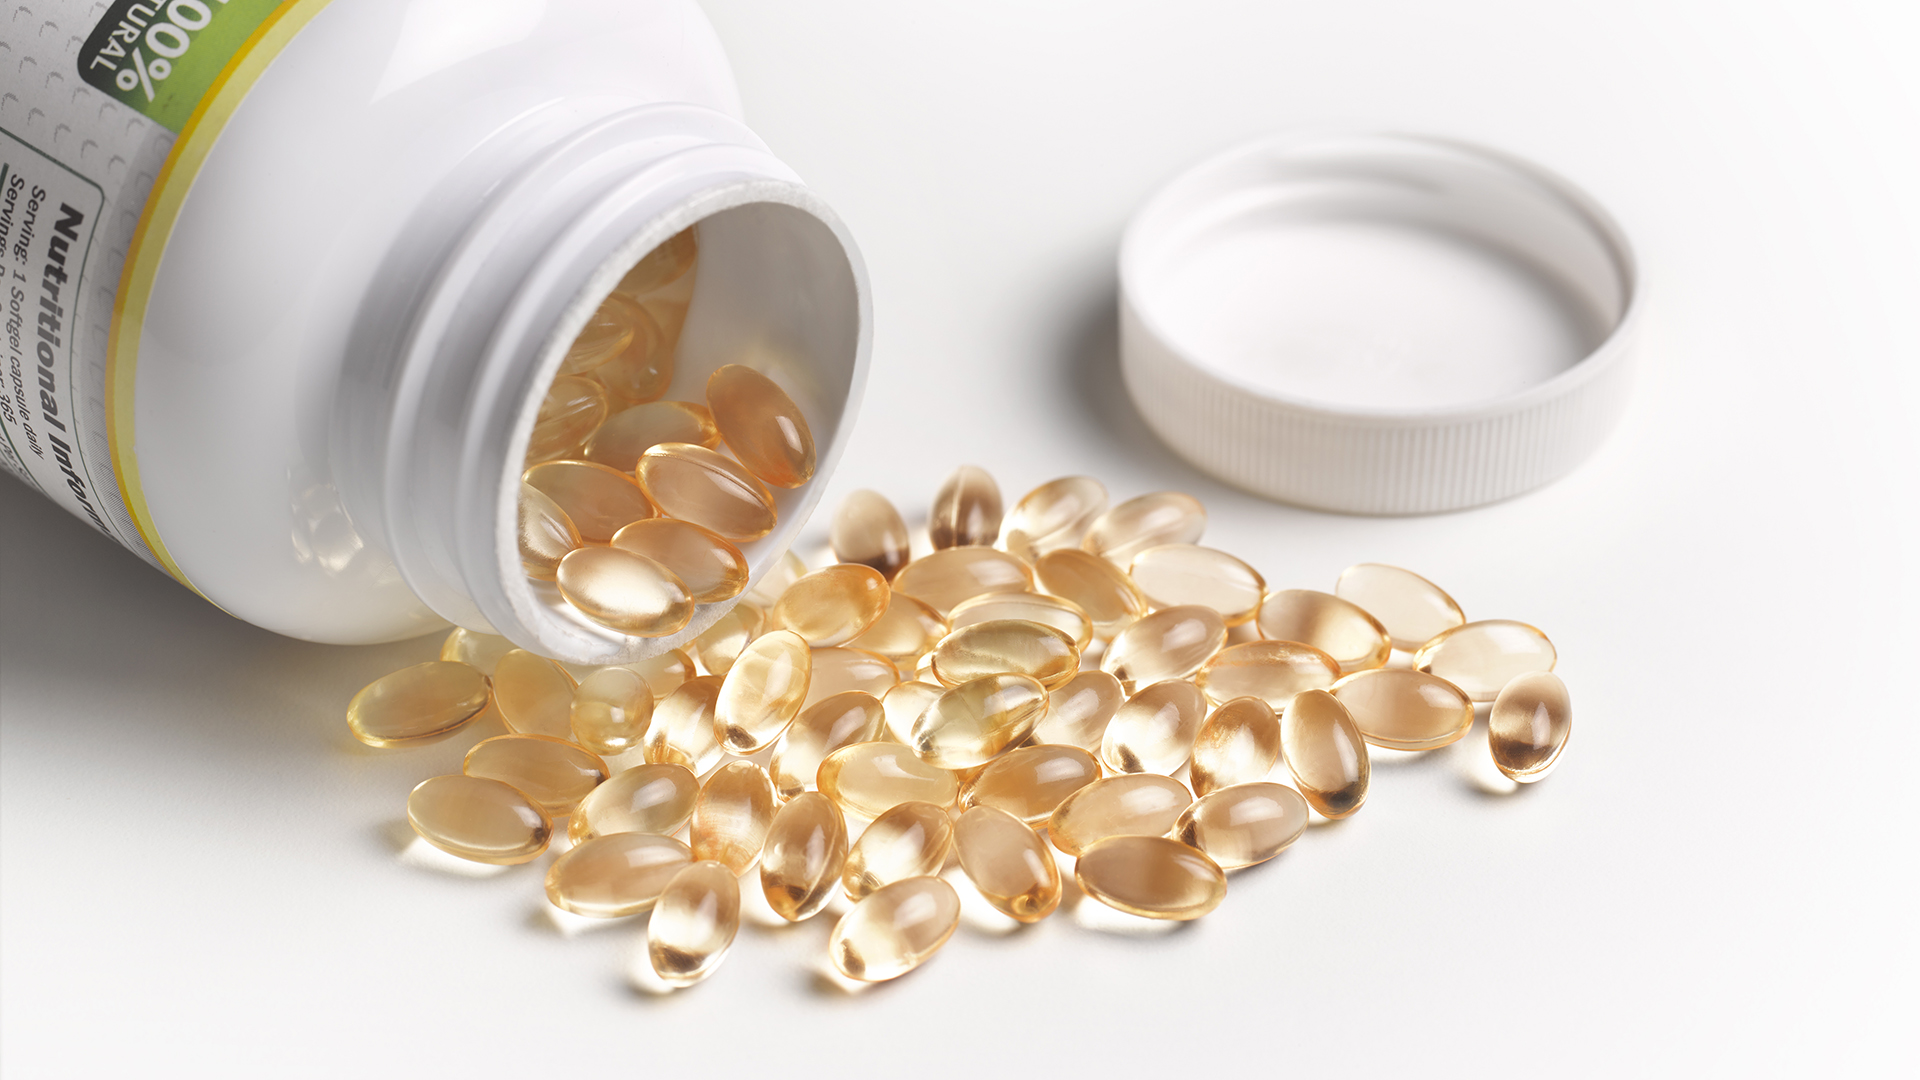  Man’s 'overzealous' vitamin D use led to overdose, hospitalization 